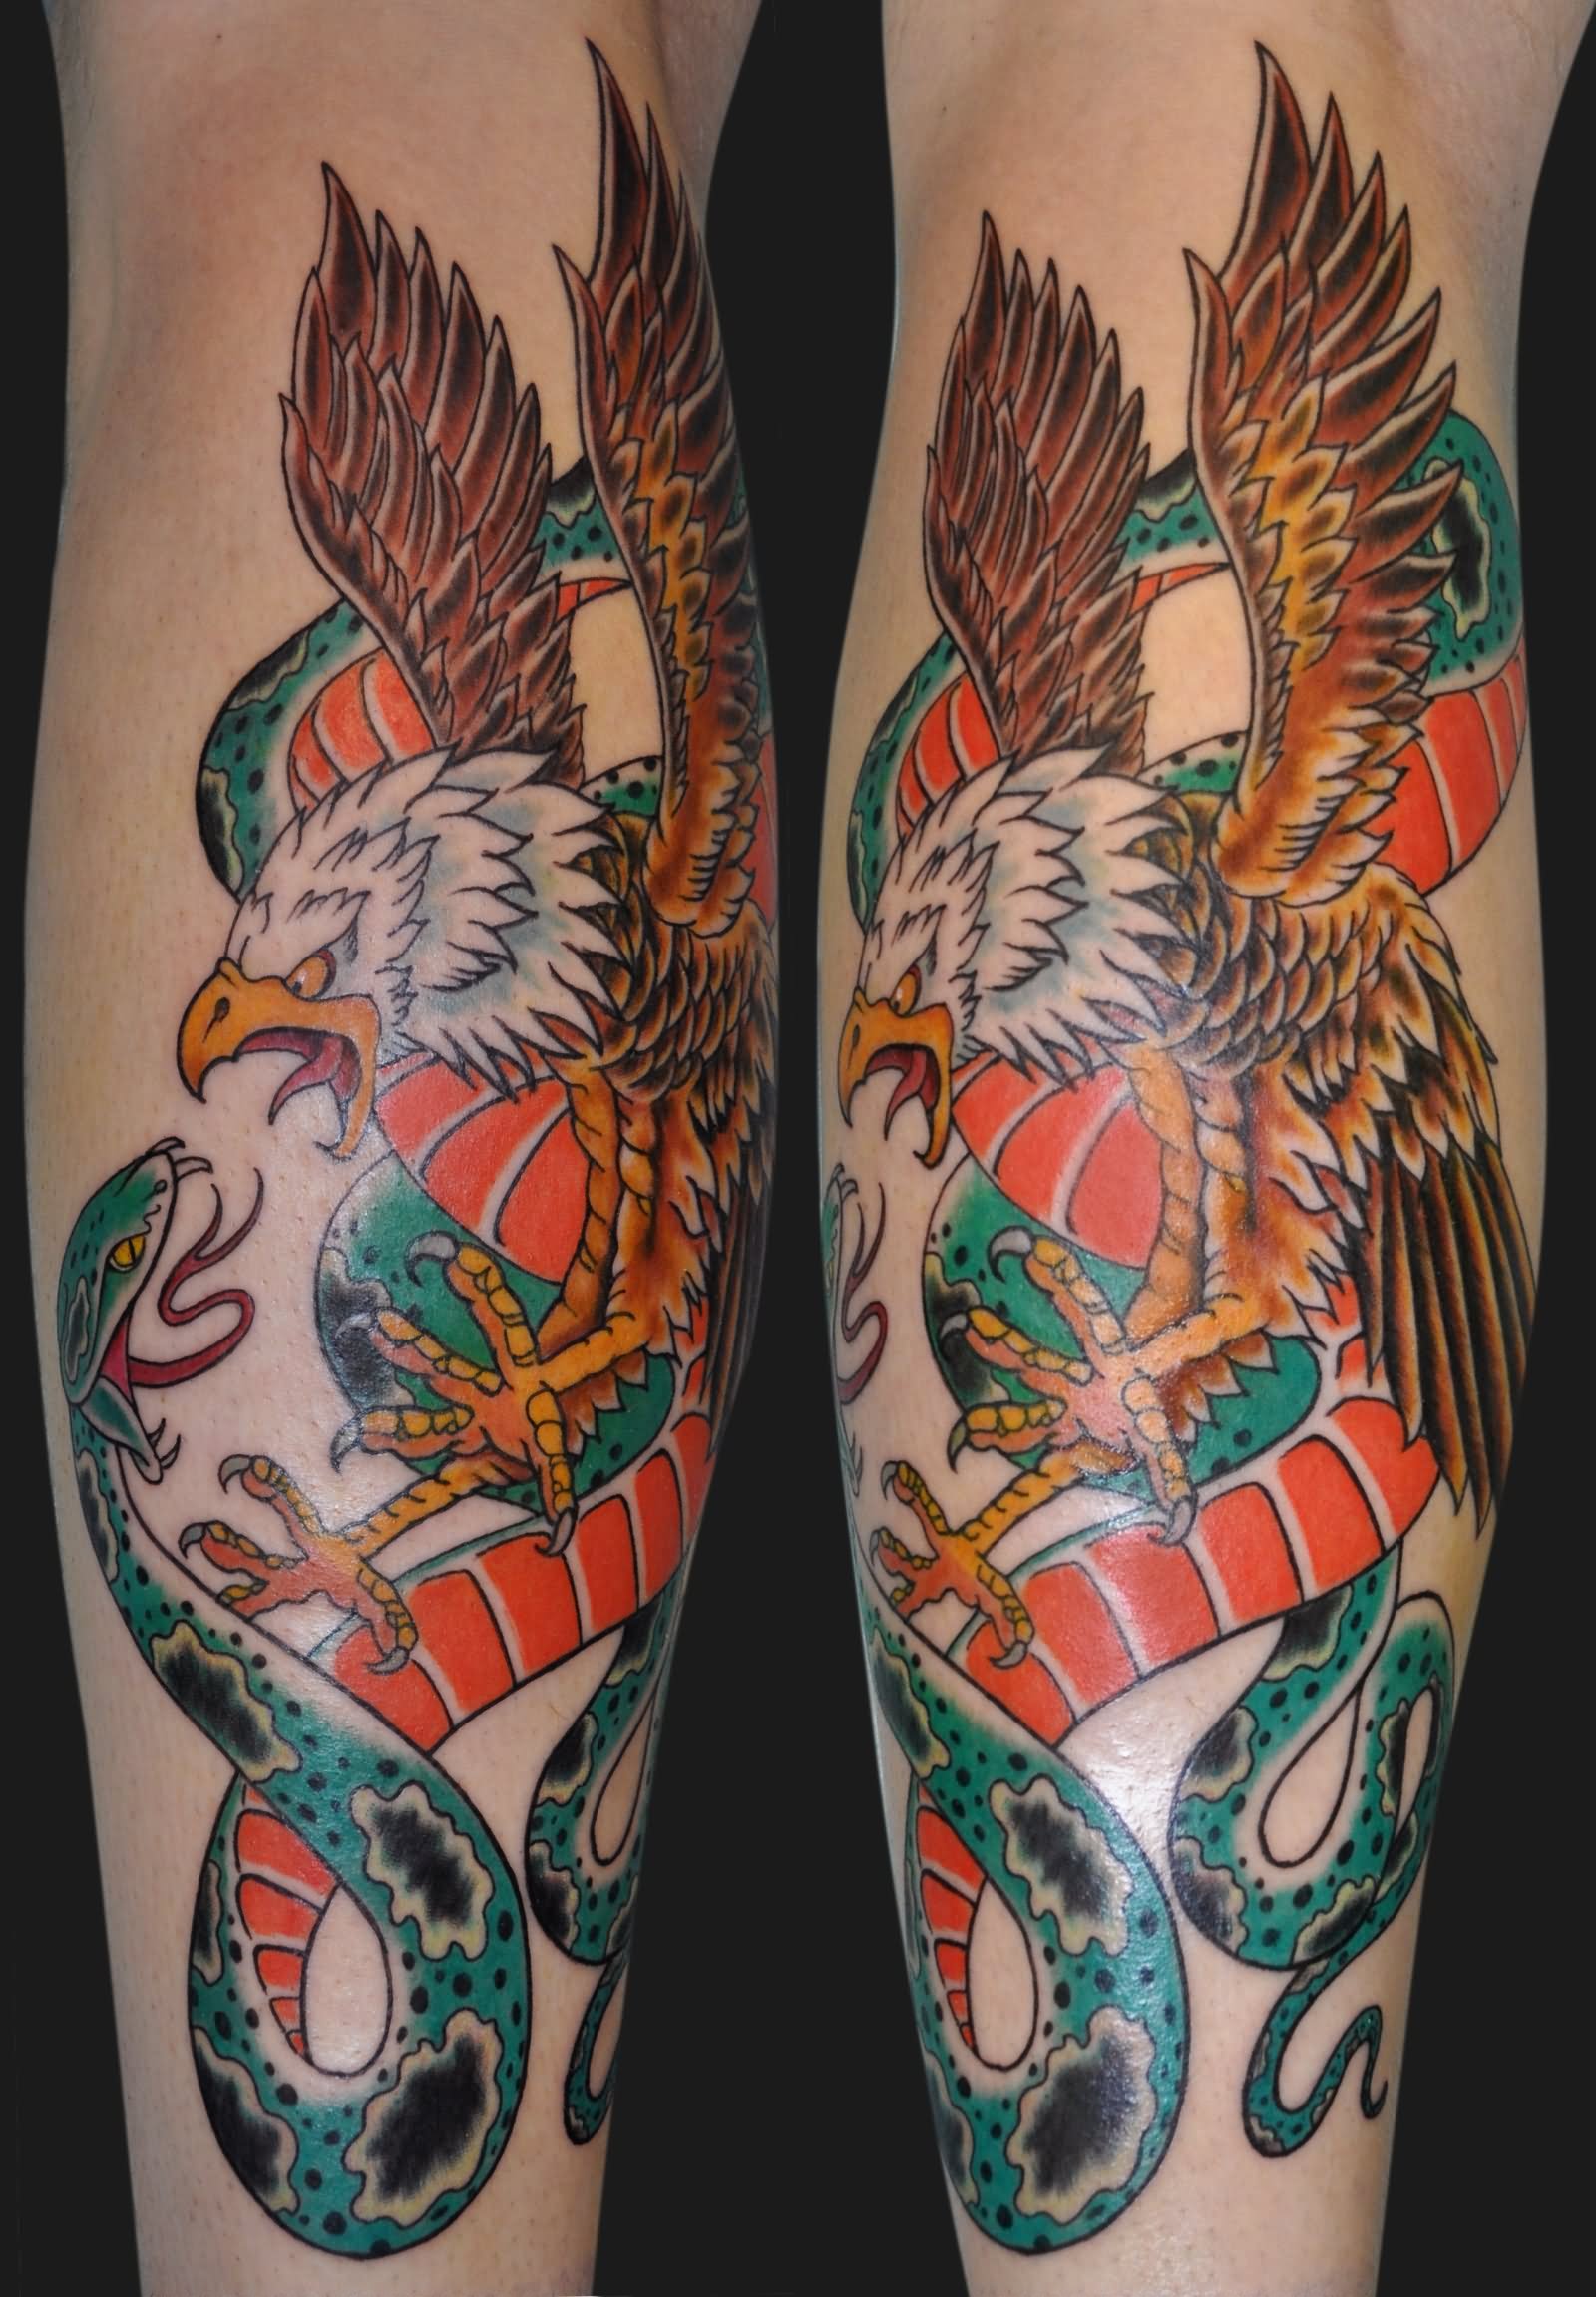 Colored Bald Eagle Vs. Snake Tattoo On Forearm